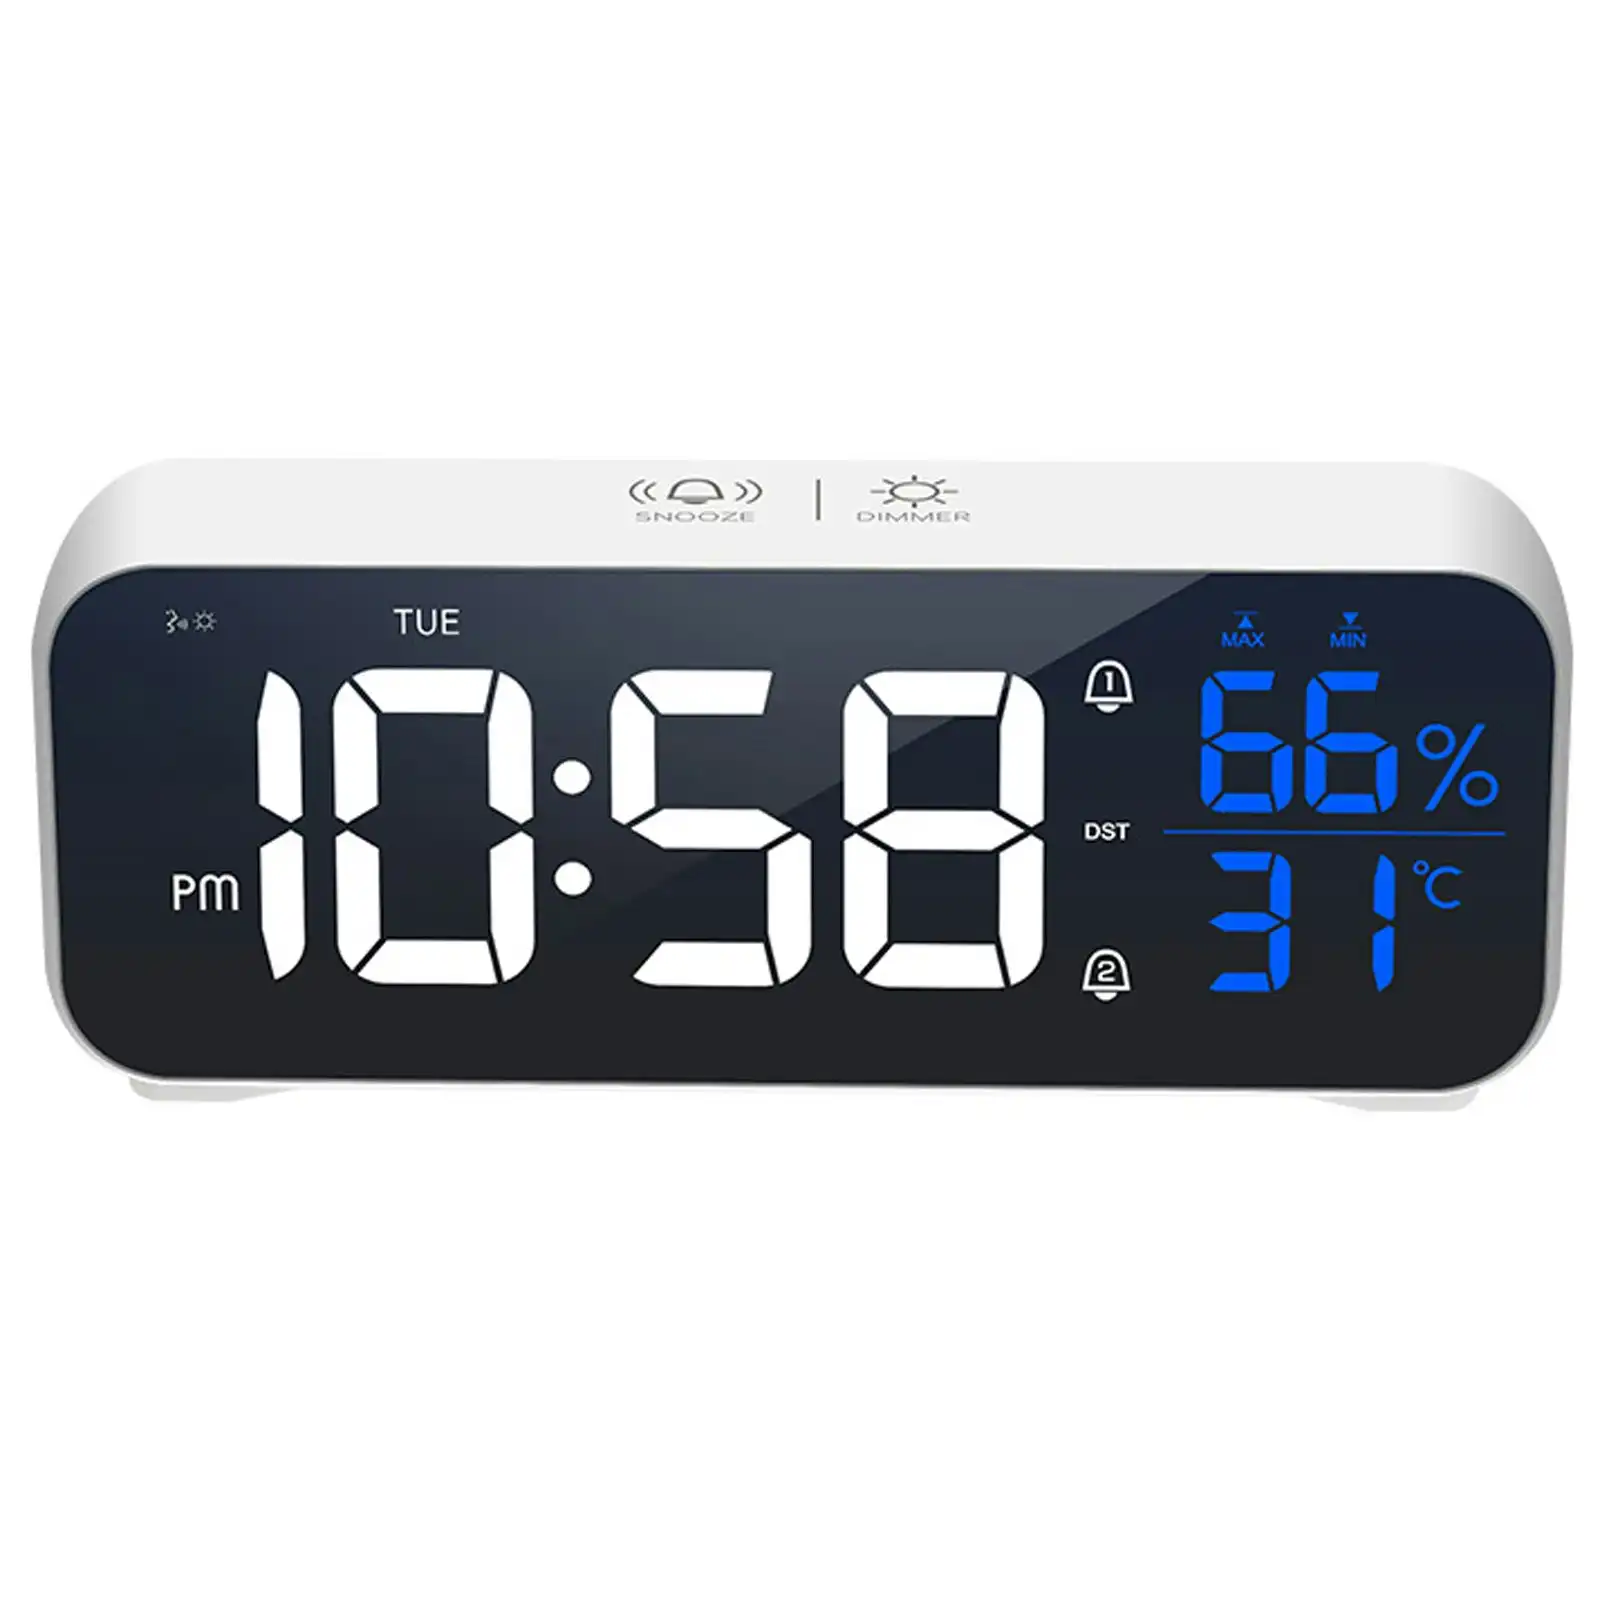 TODO LED Digital Alarm Clock Temperature Display Music Alarm USB Rechargeable - White